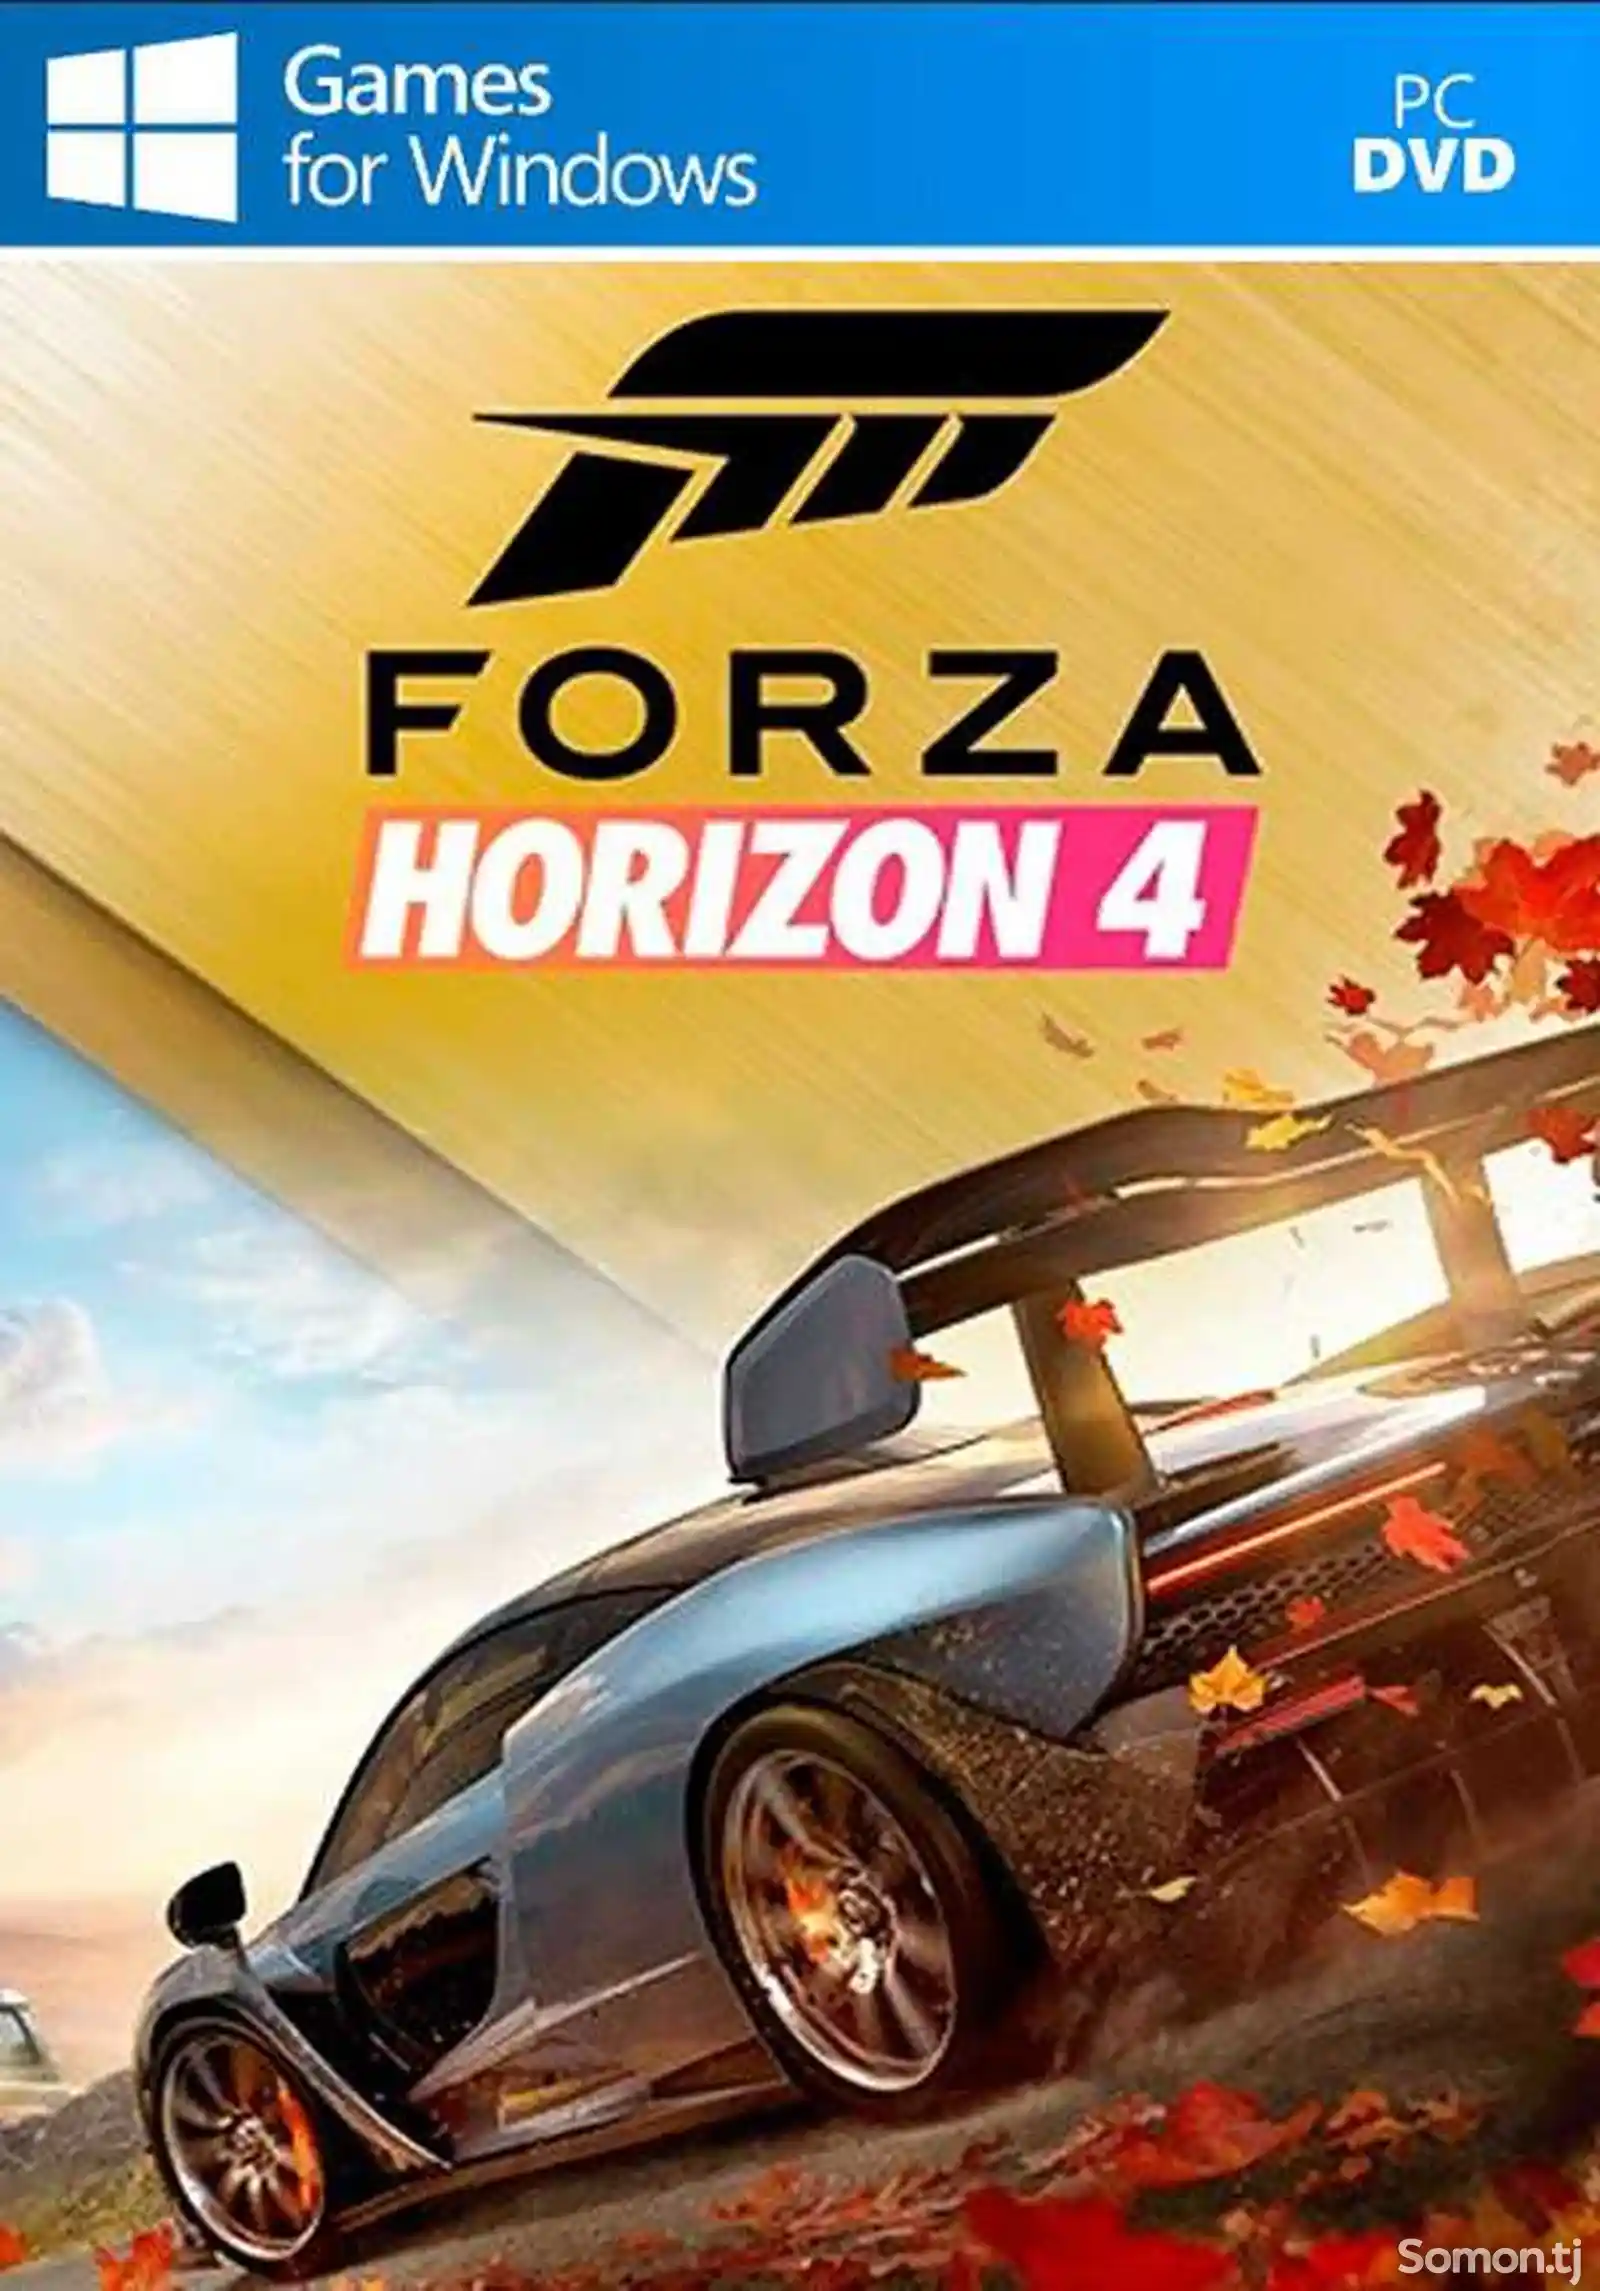 Игра Forza horizon 4 для компьютера-пк-pc-1